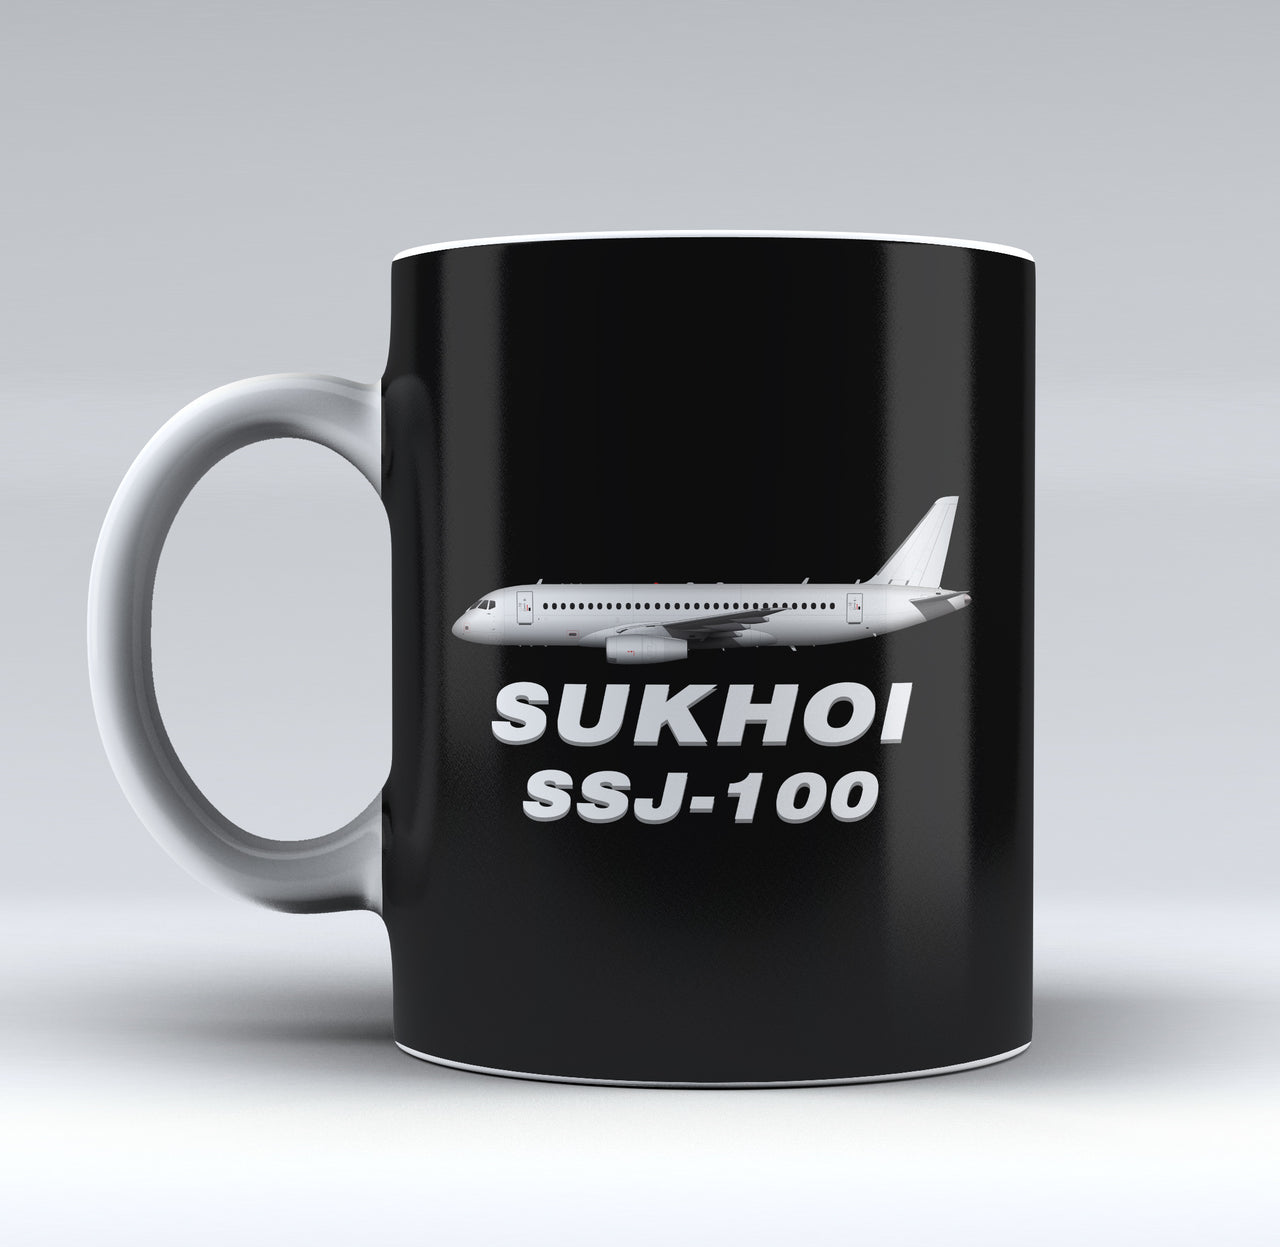 The Sukhoi Superjet 100 Designed Mugs